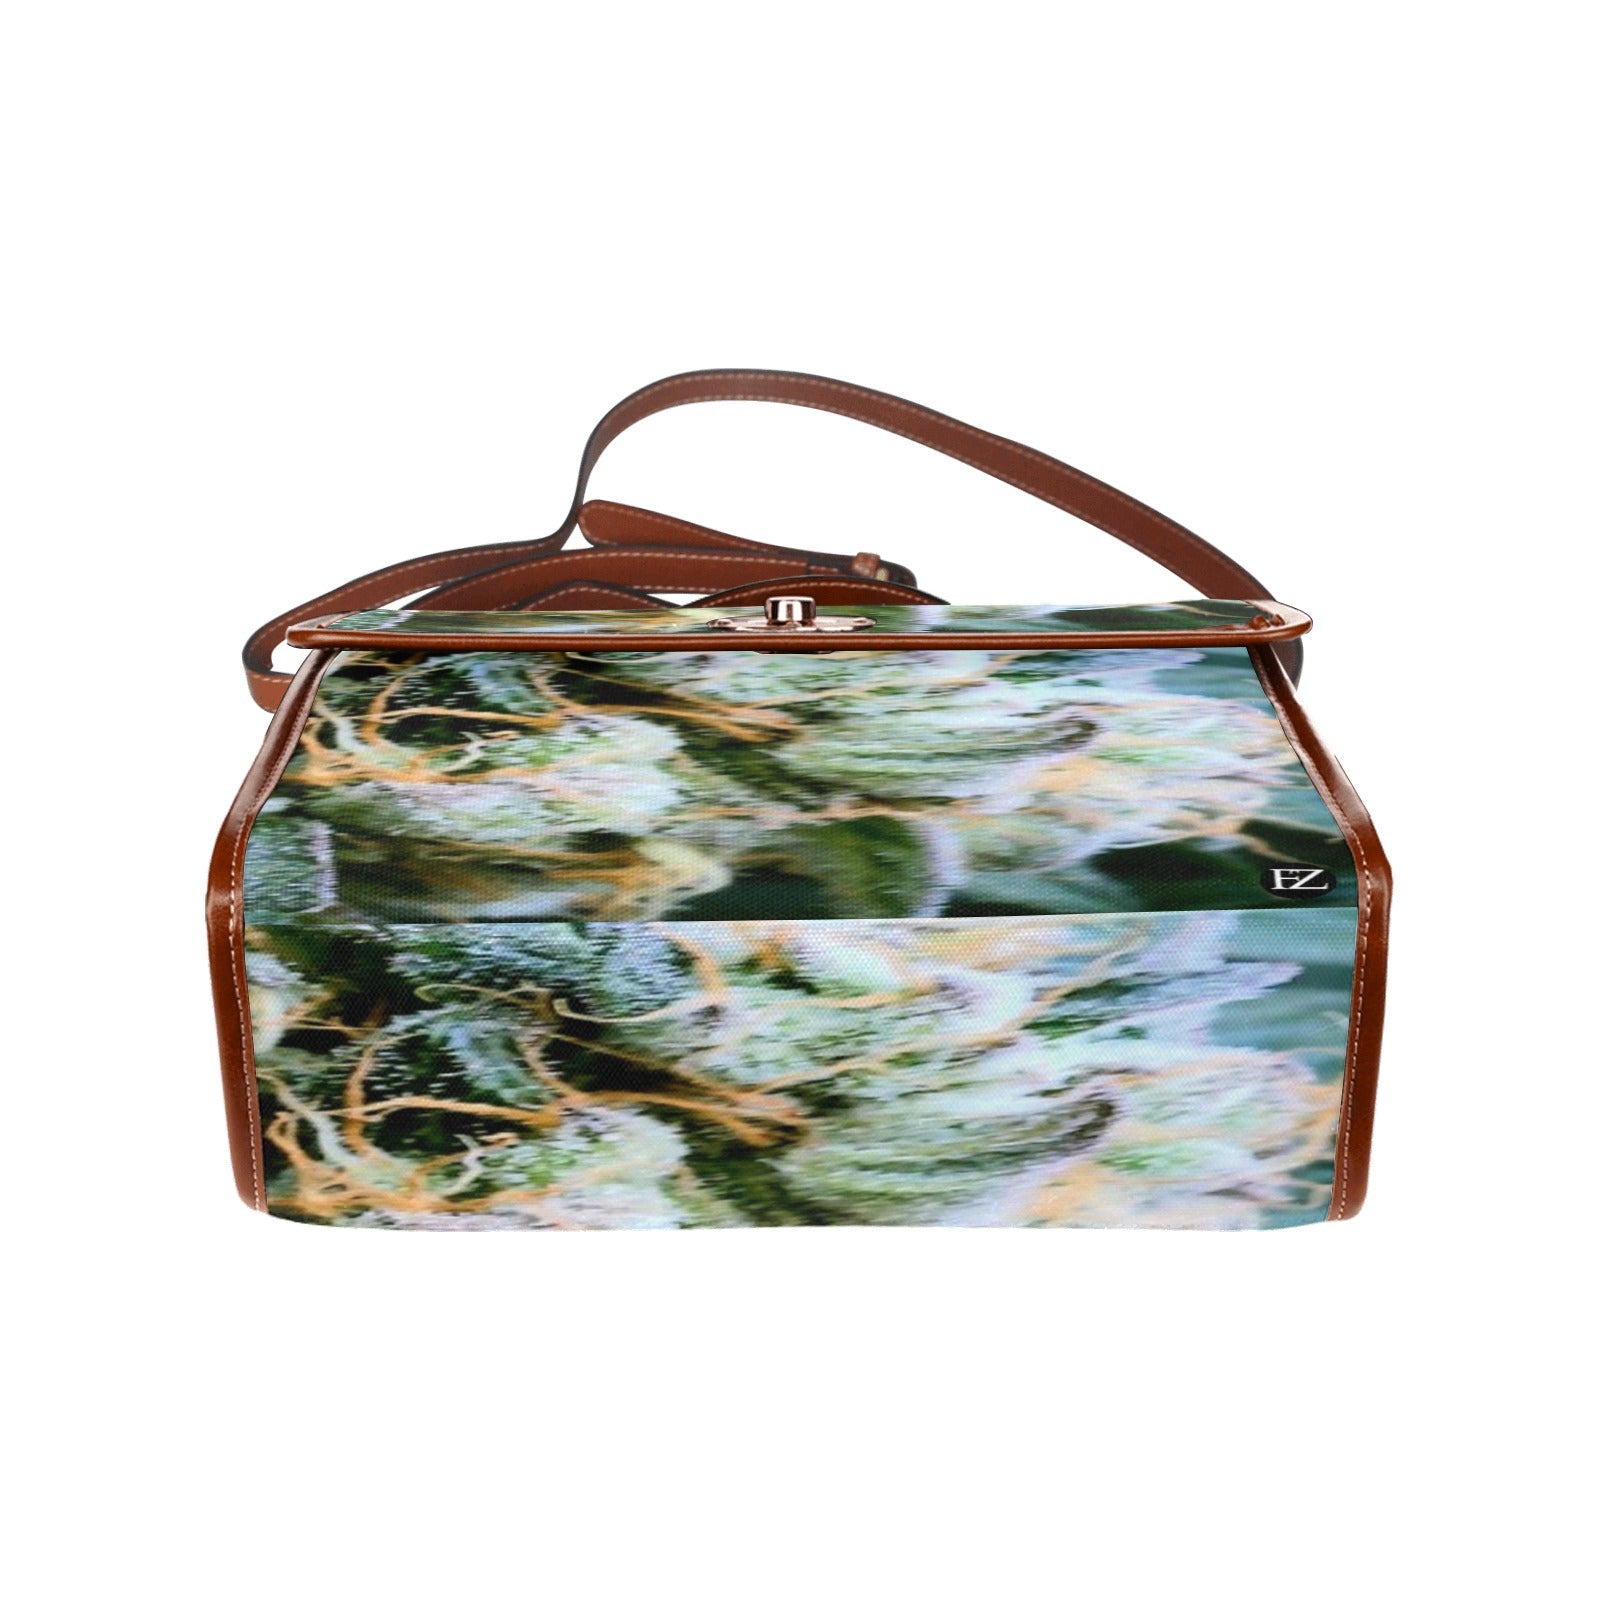 fz weed one handbag all over print waterproof canvas bag(model1641)(brown strap)